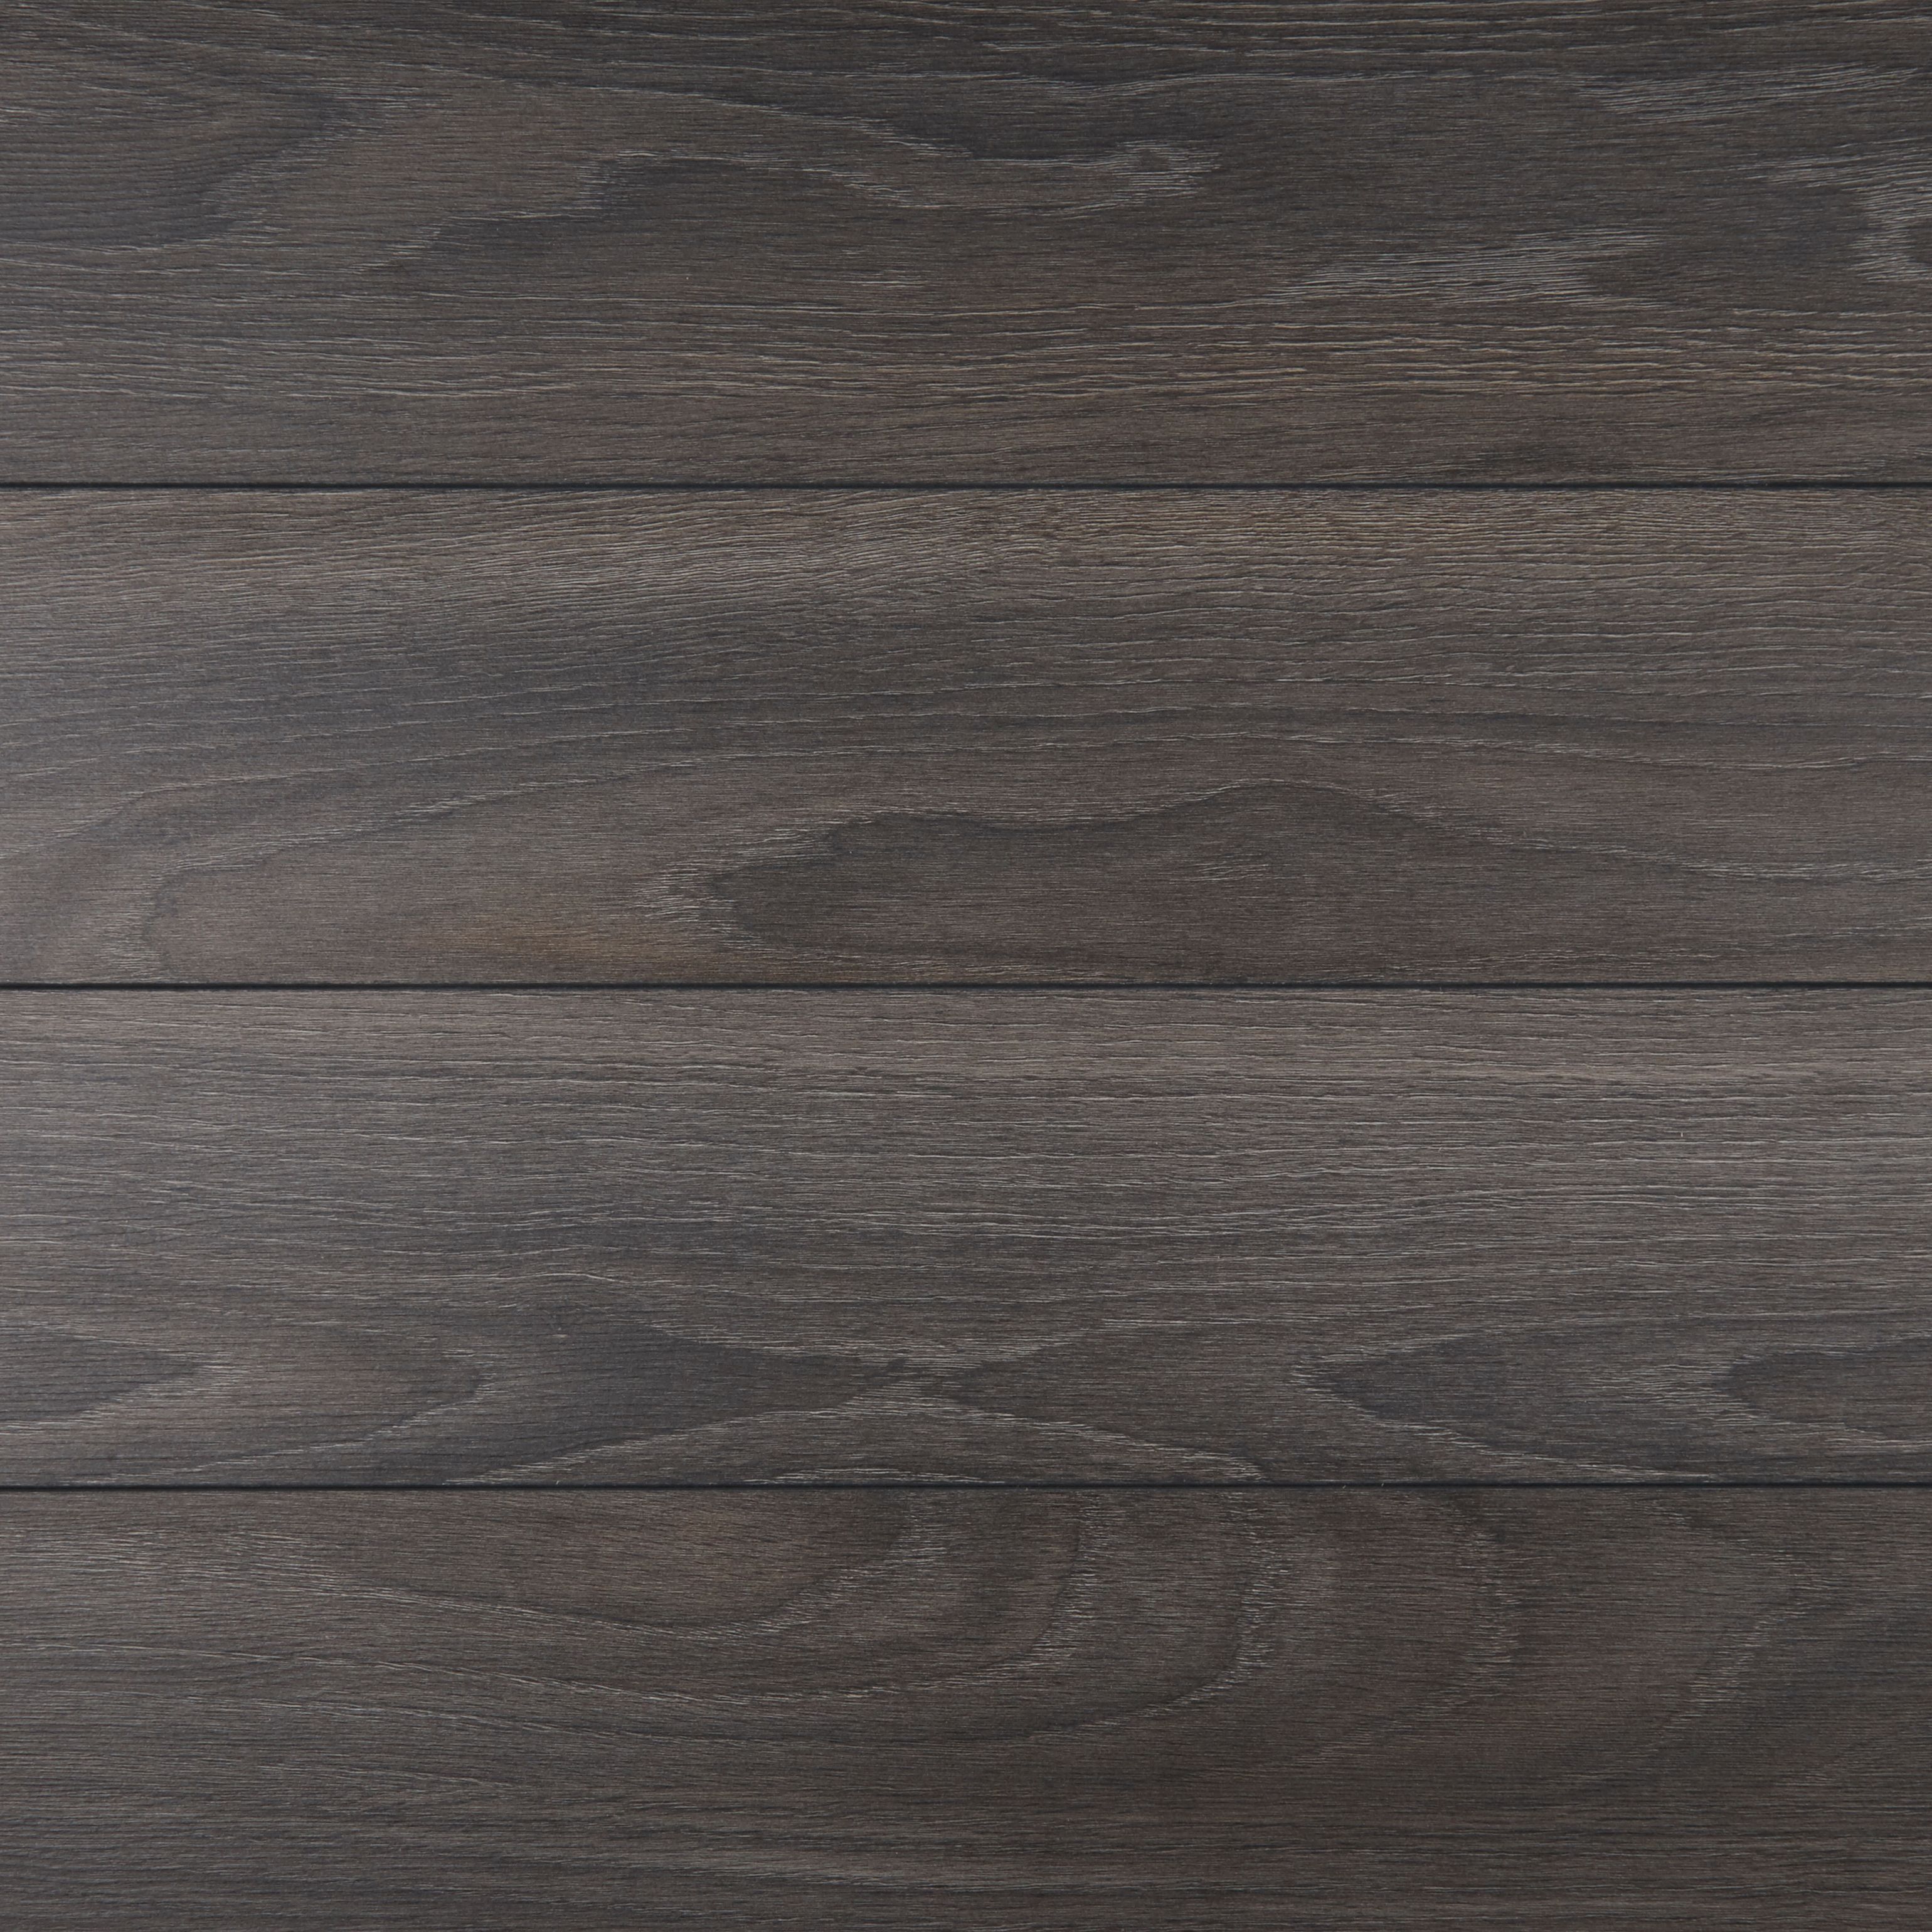 Horsham Grey Gloss Oak effect Laminate Flooring Sample